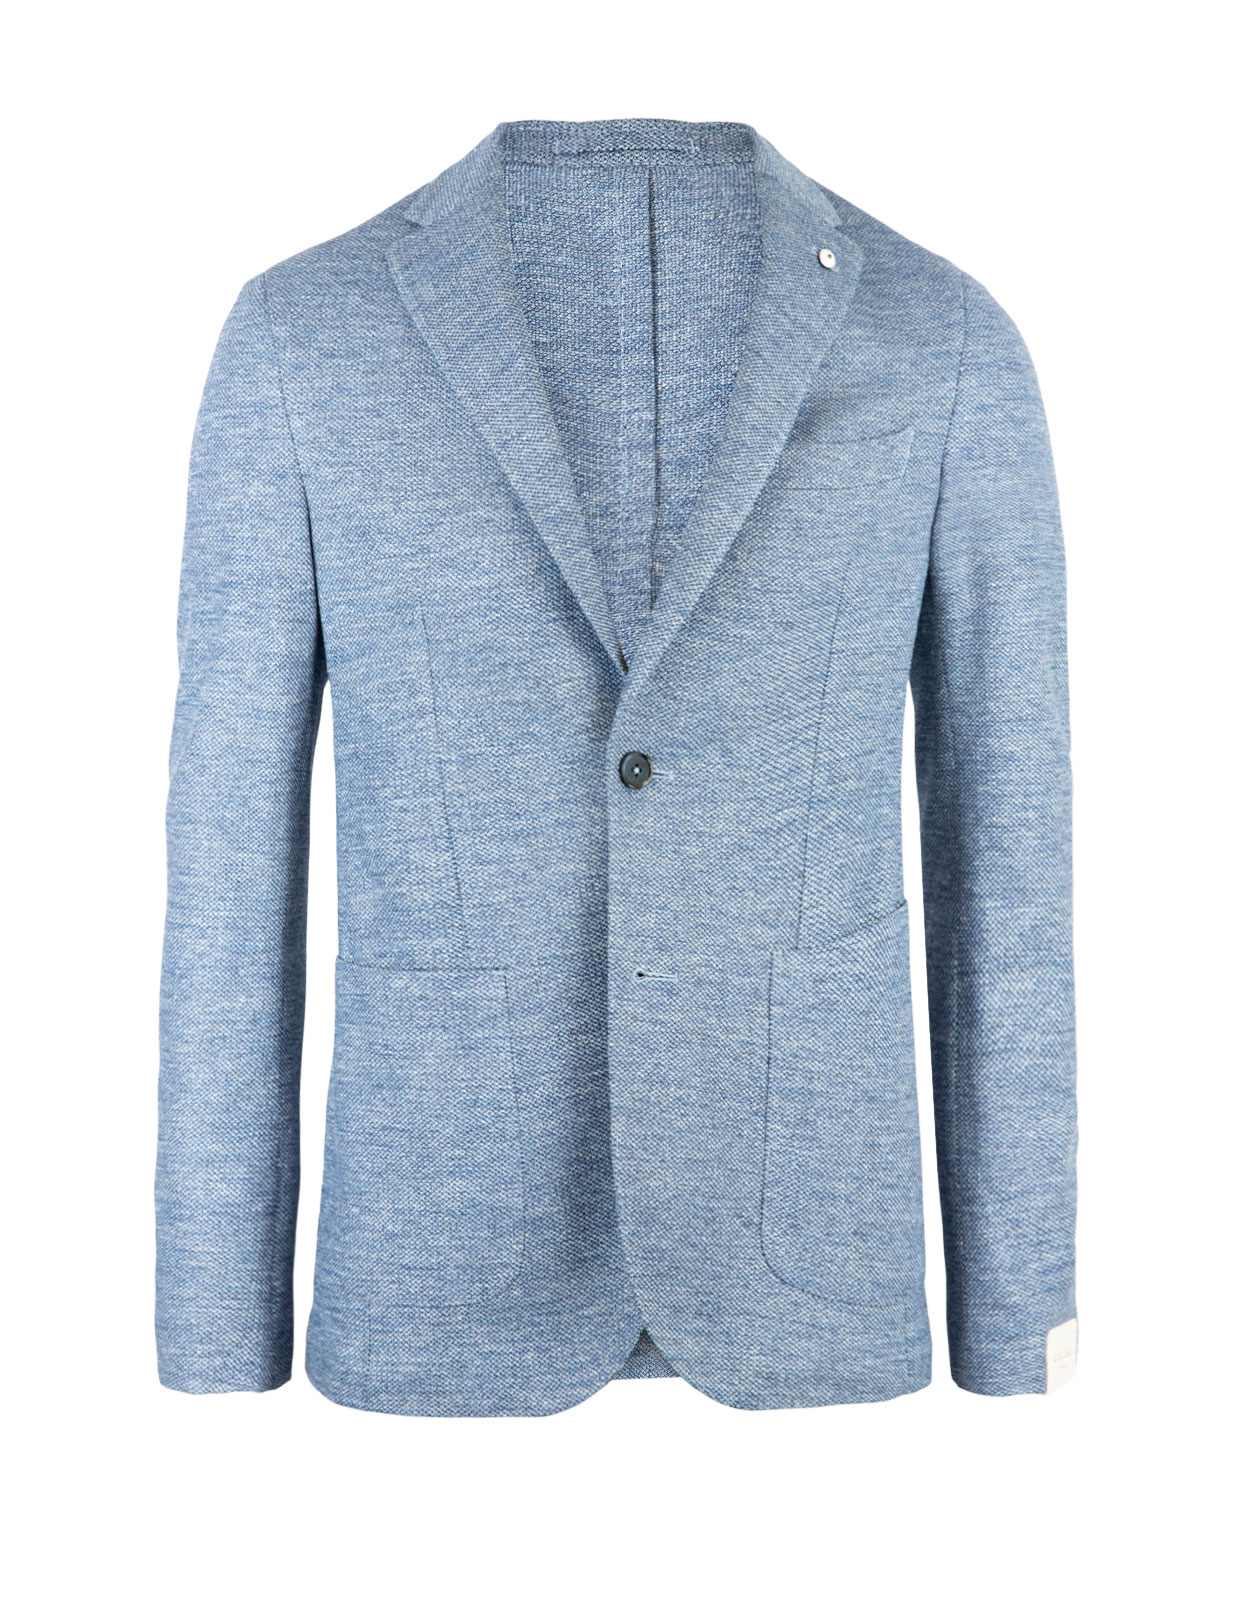 Jack Jersey Jacket Linen Cotton Light Blue